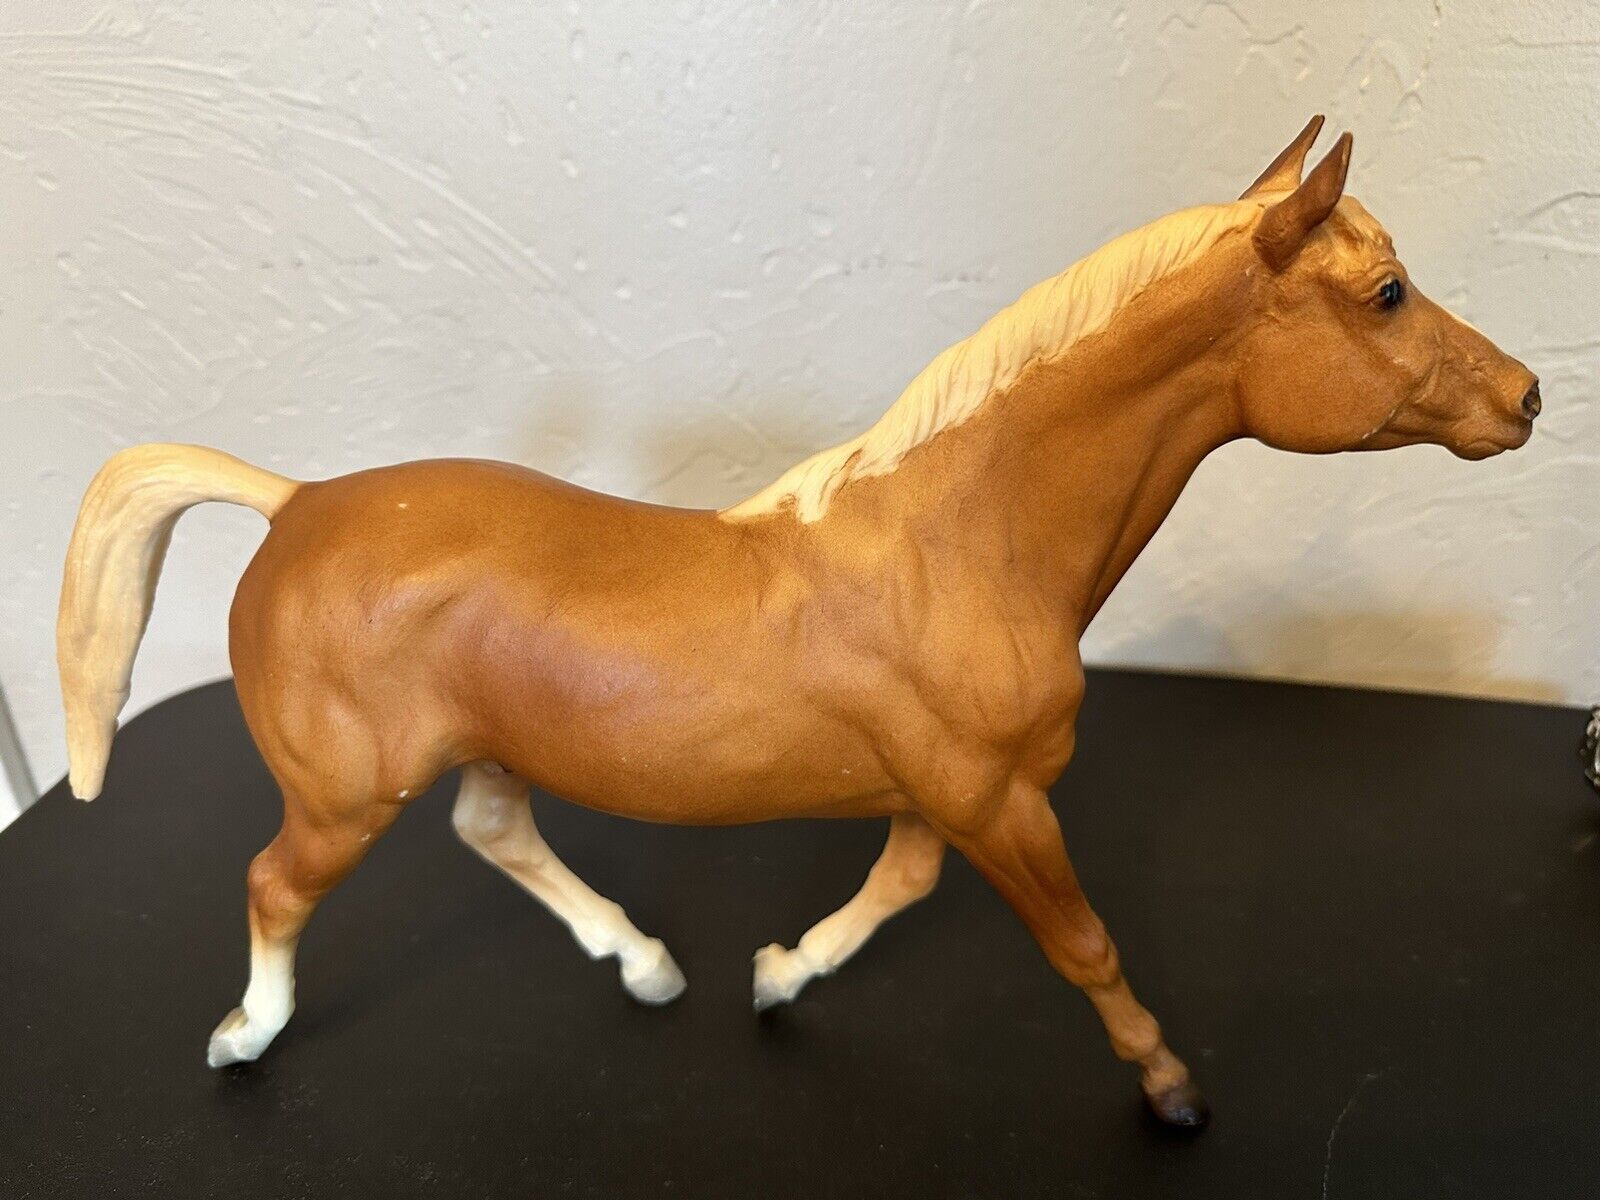 Breyer Horse Morganglanz Chestnut #59 Vintage 1980s Original Toy Figure